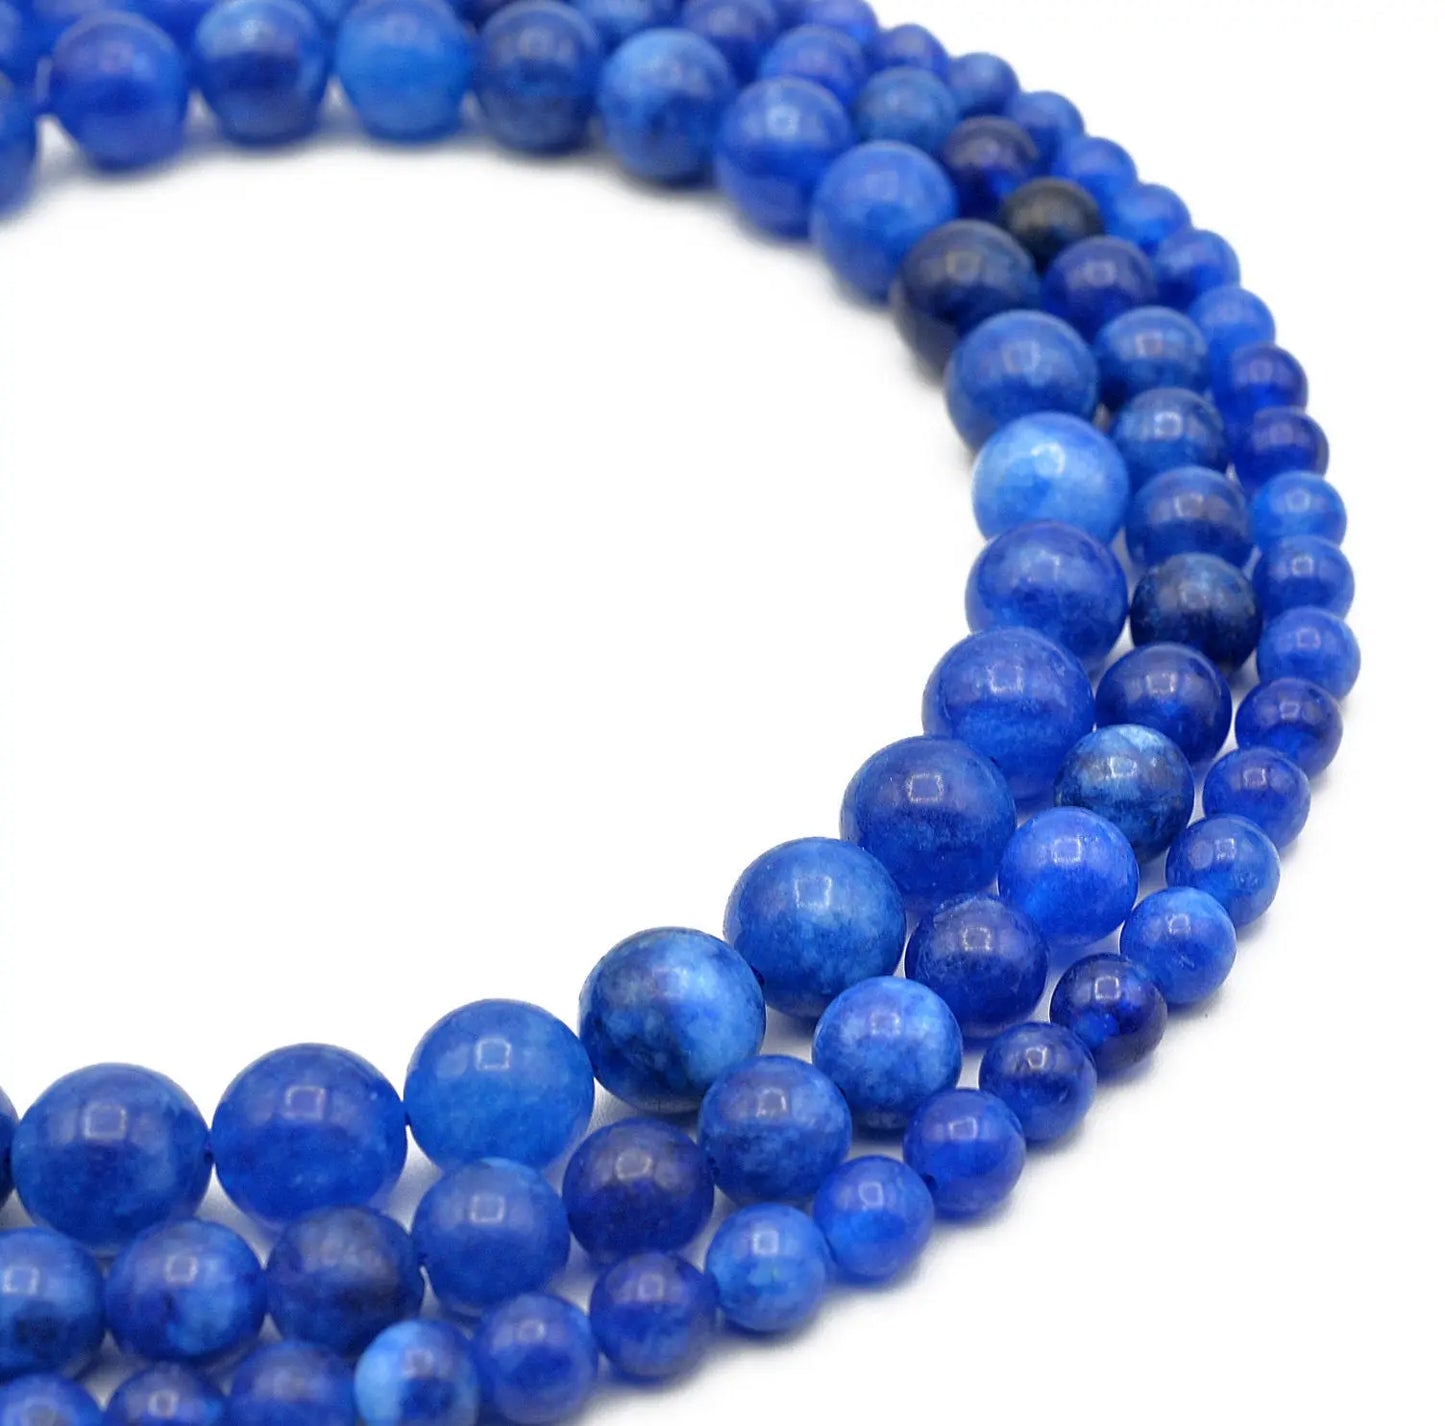 Blue Kyanite Stone Beads Gemstone AAA Quality 15" strand Round 6mm,8mm,10mm Natural Stones Bead healing chakra stone for Jewelry Making - BeadsFindingDepot